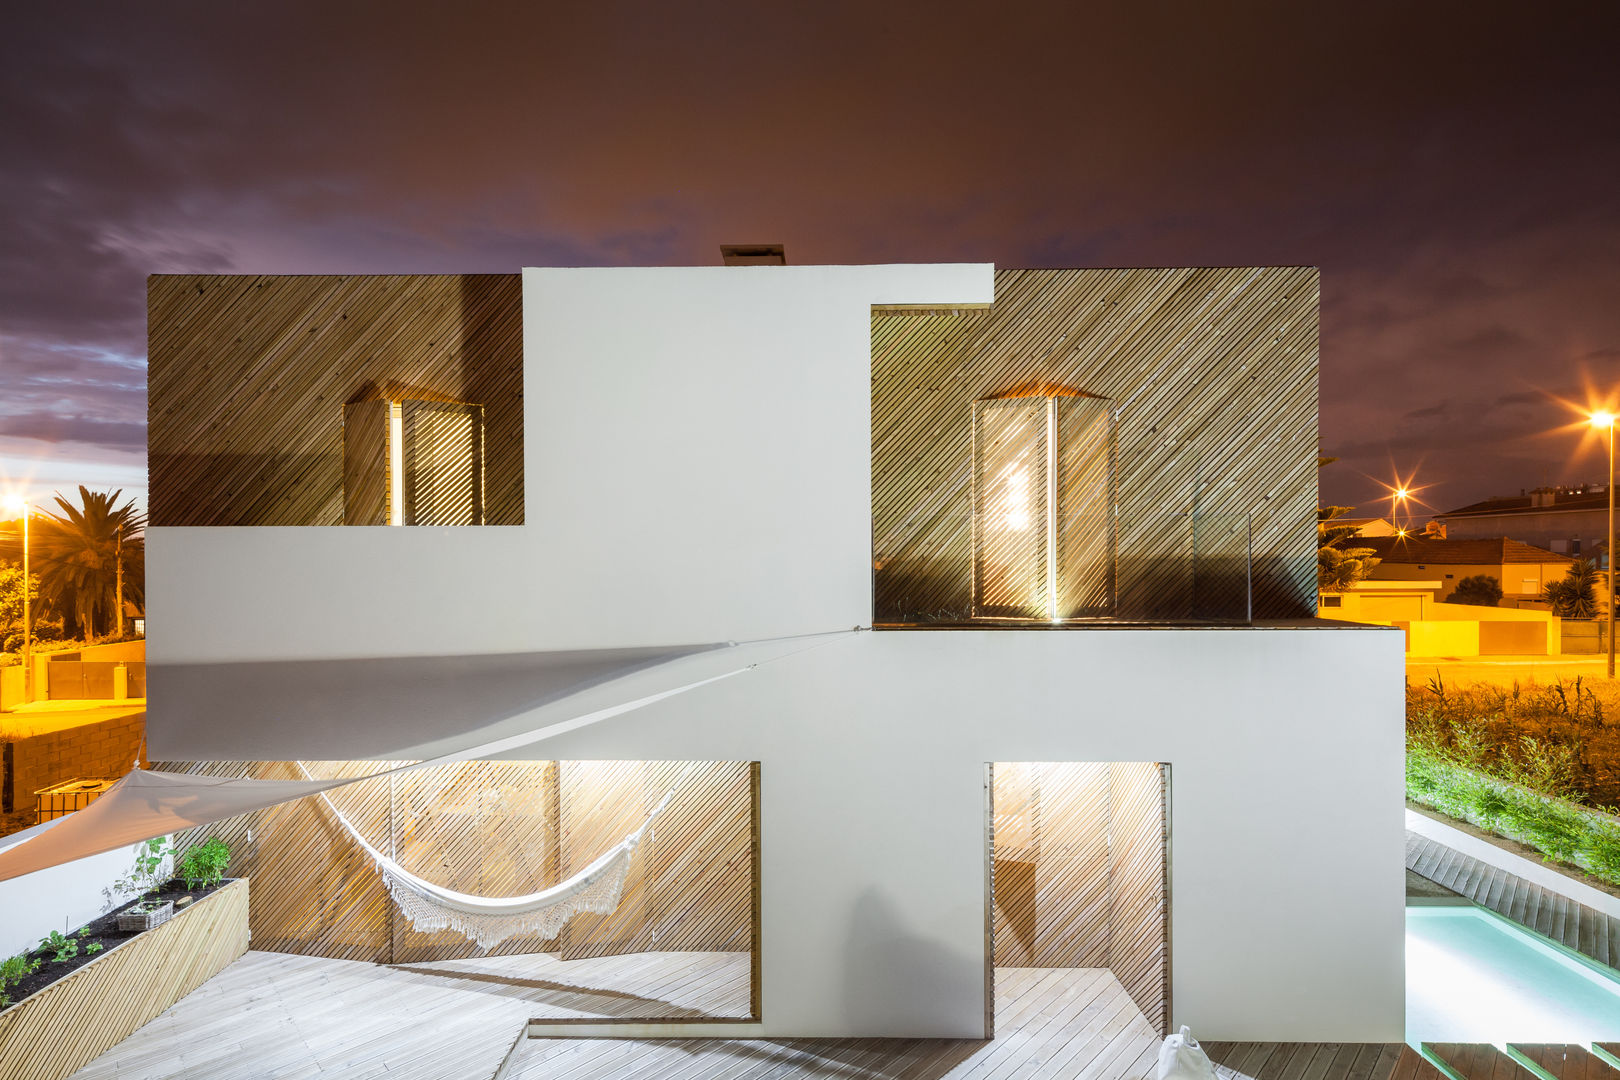 SilverWoodHouse, Joao Morgado - Architectural Photography Joao Morgado - Architectural Photography Maisons modernes